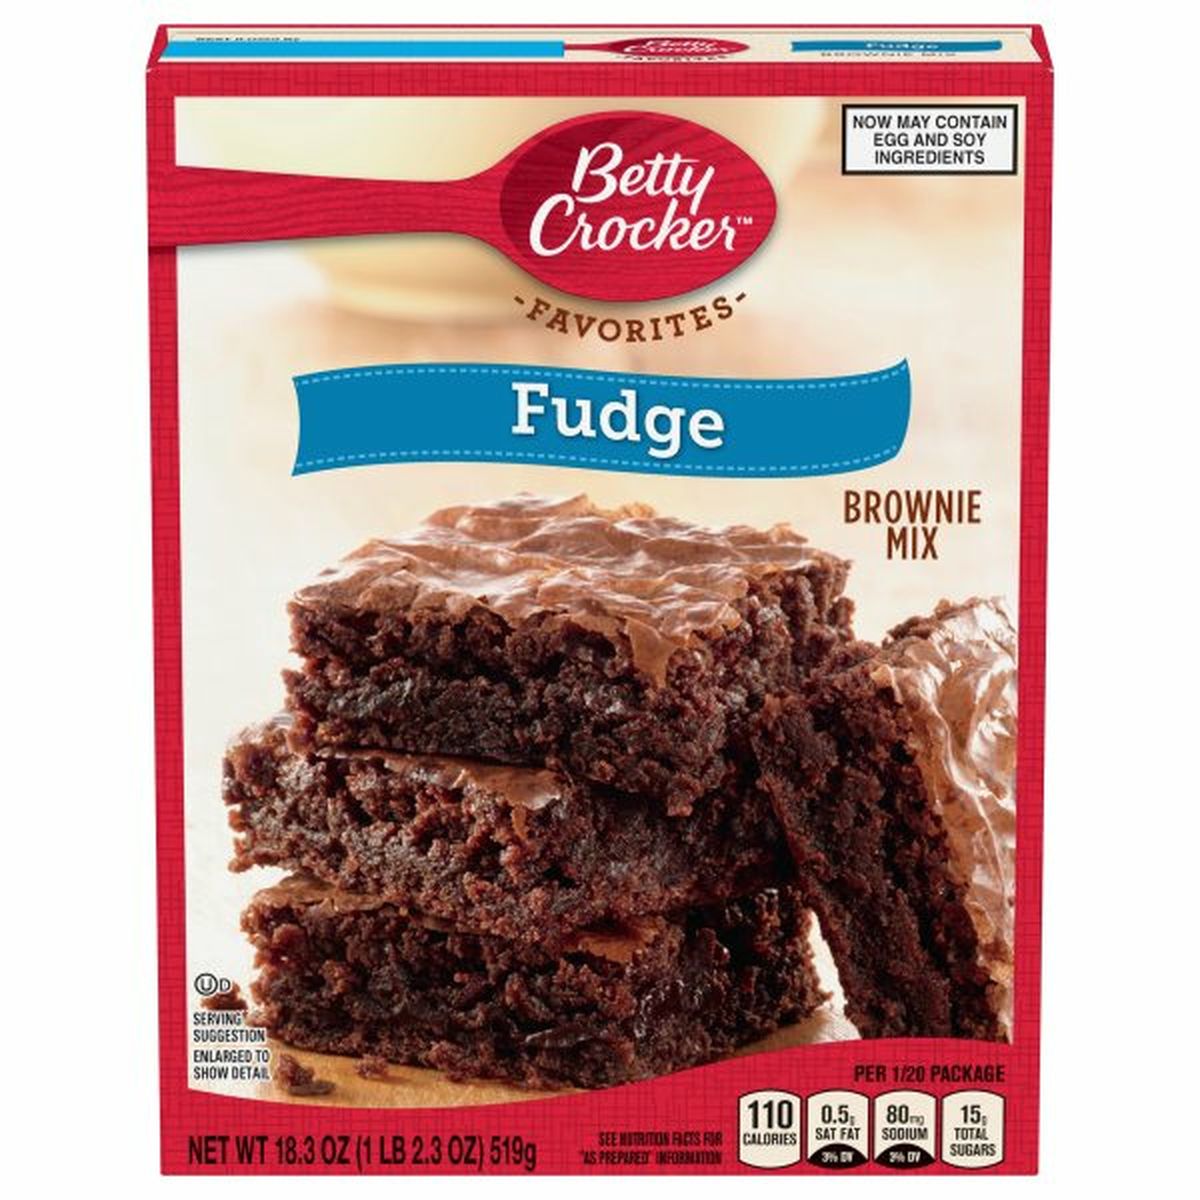 Calories in Betty Crocker Brownie Mix, Fudge